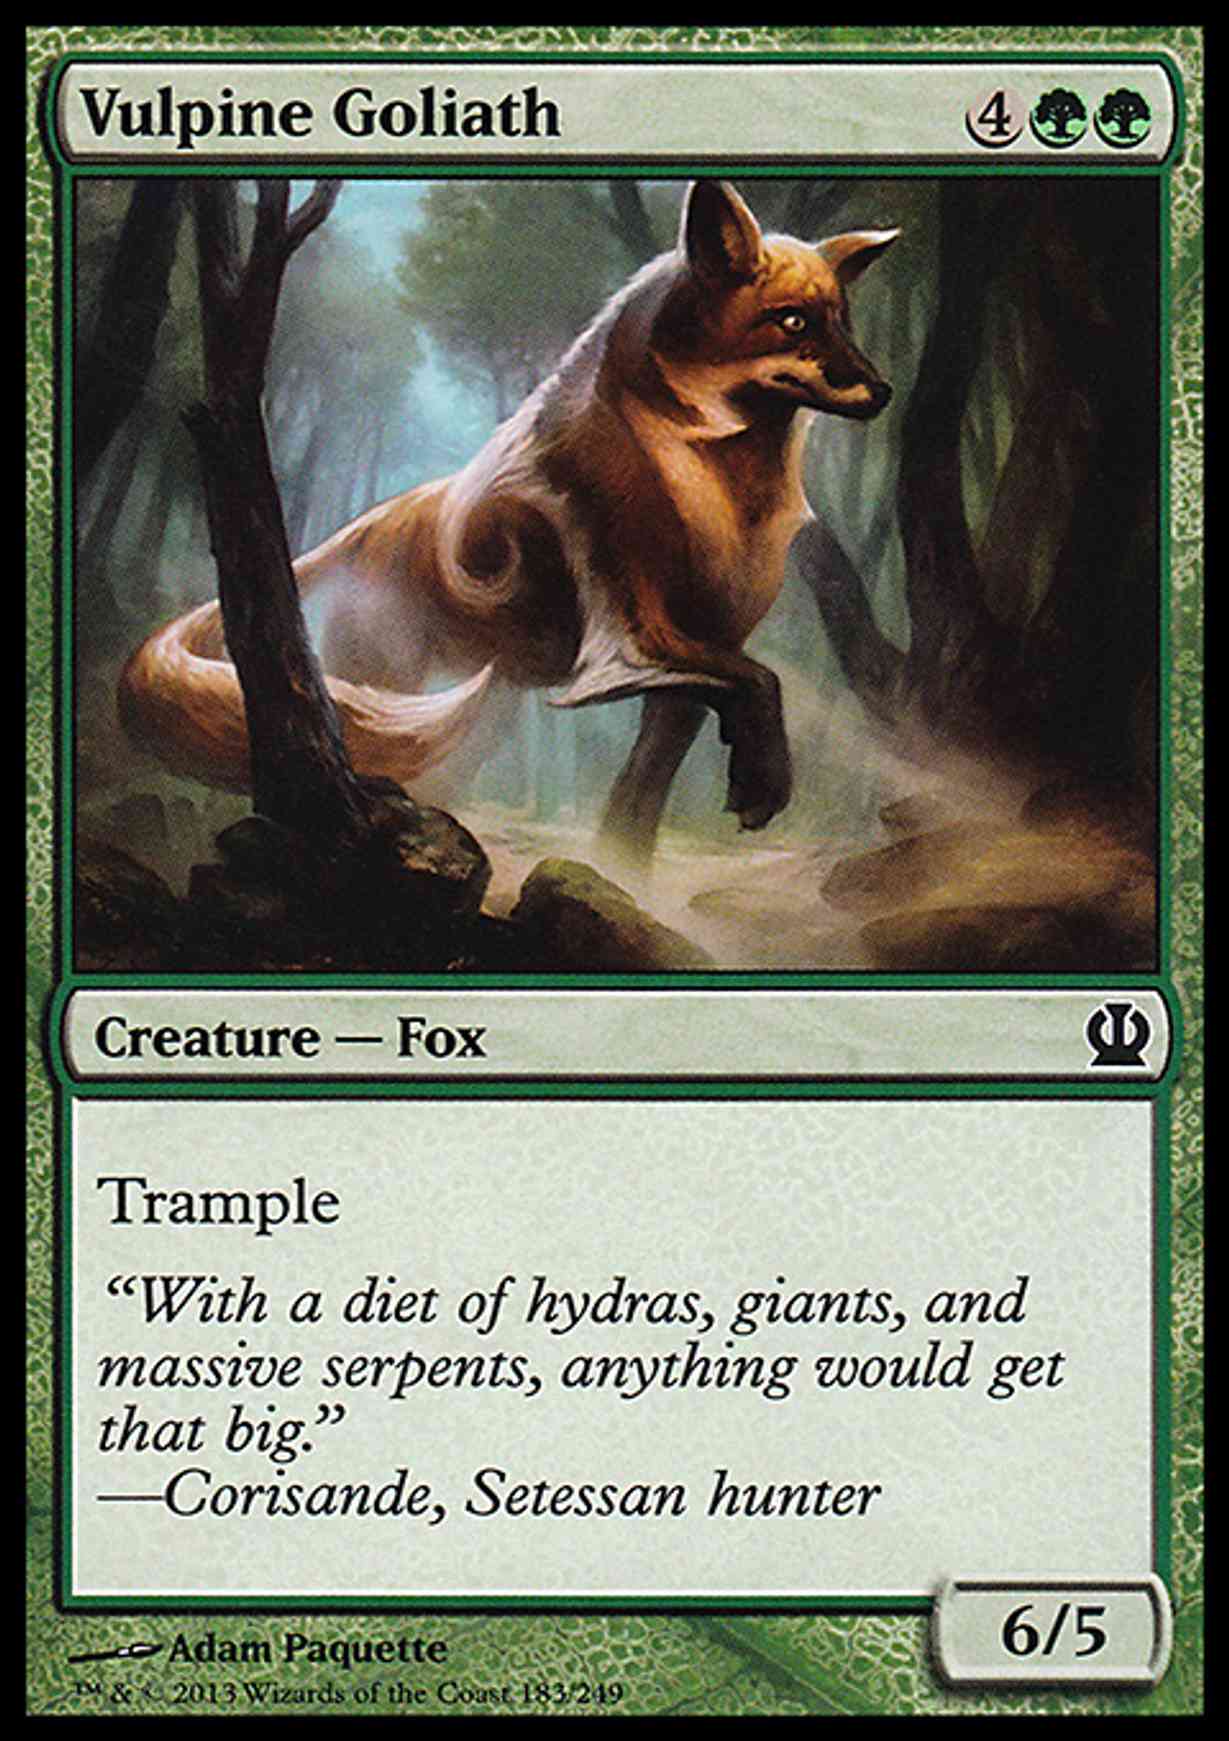 Vulpine Goliath magic card front